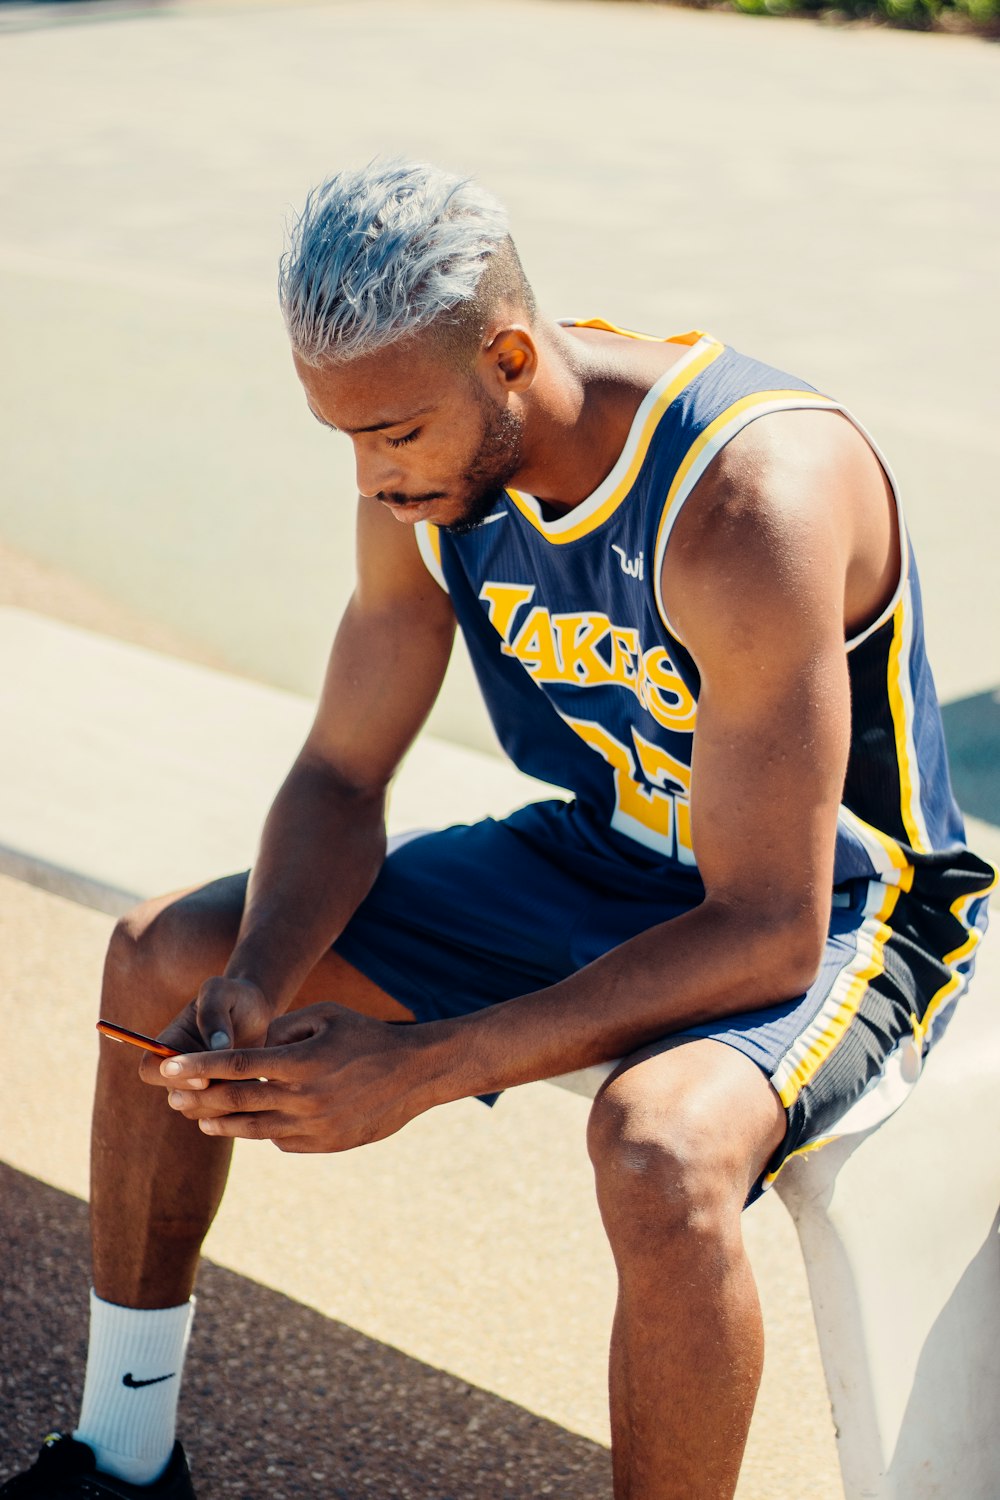 a man sitting on a bench wearing a basketball uniform